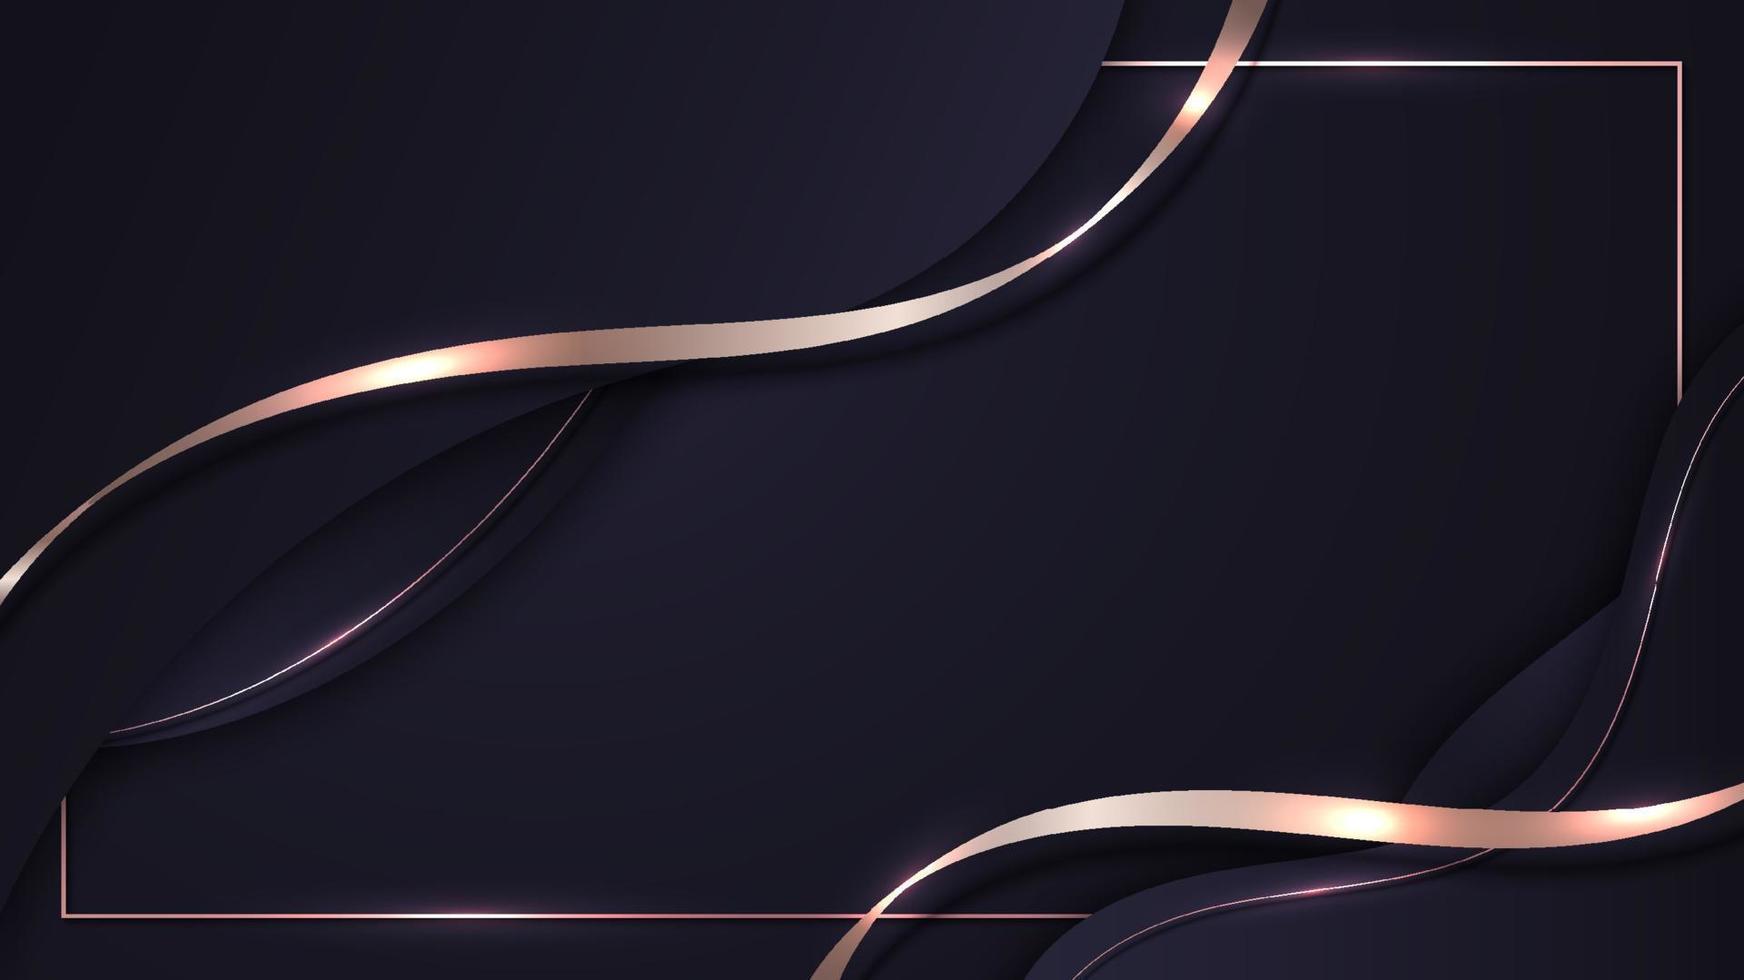 líneas de onda de color púrpura de lujo 3d abstracto con decoración de línea curva de oro rosa brillante e iluminación de brillo de marco sobre fondo oscuro degradado vector